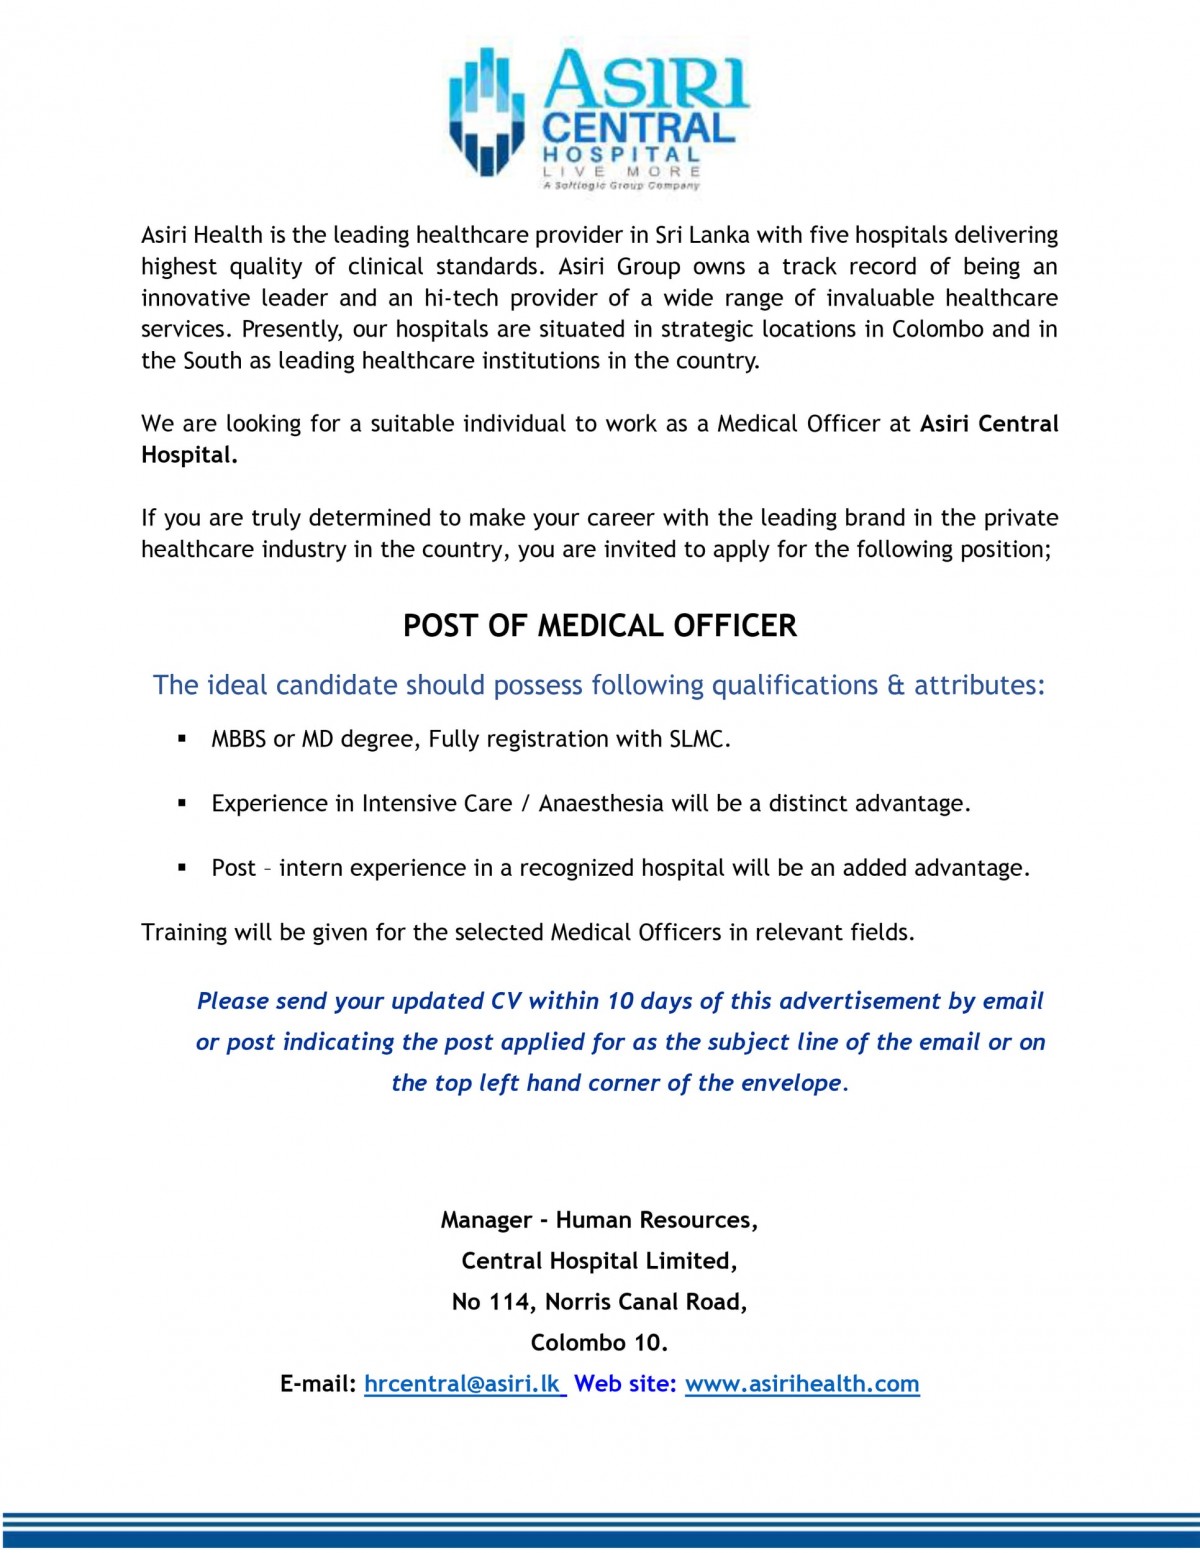 Medical Officer Jobs Vacancies - Asiri Hospital Jobs Vacancy Details